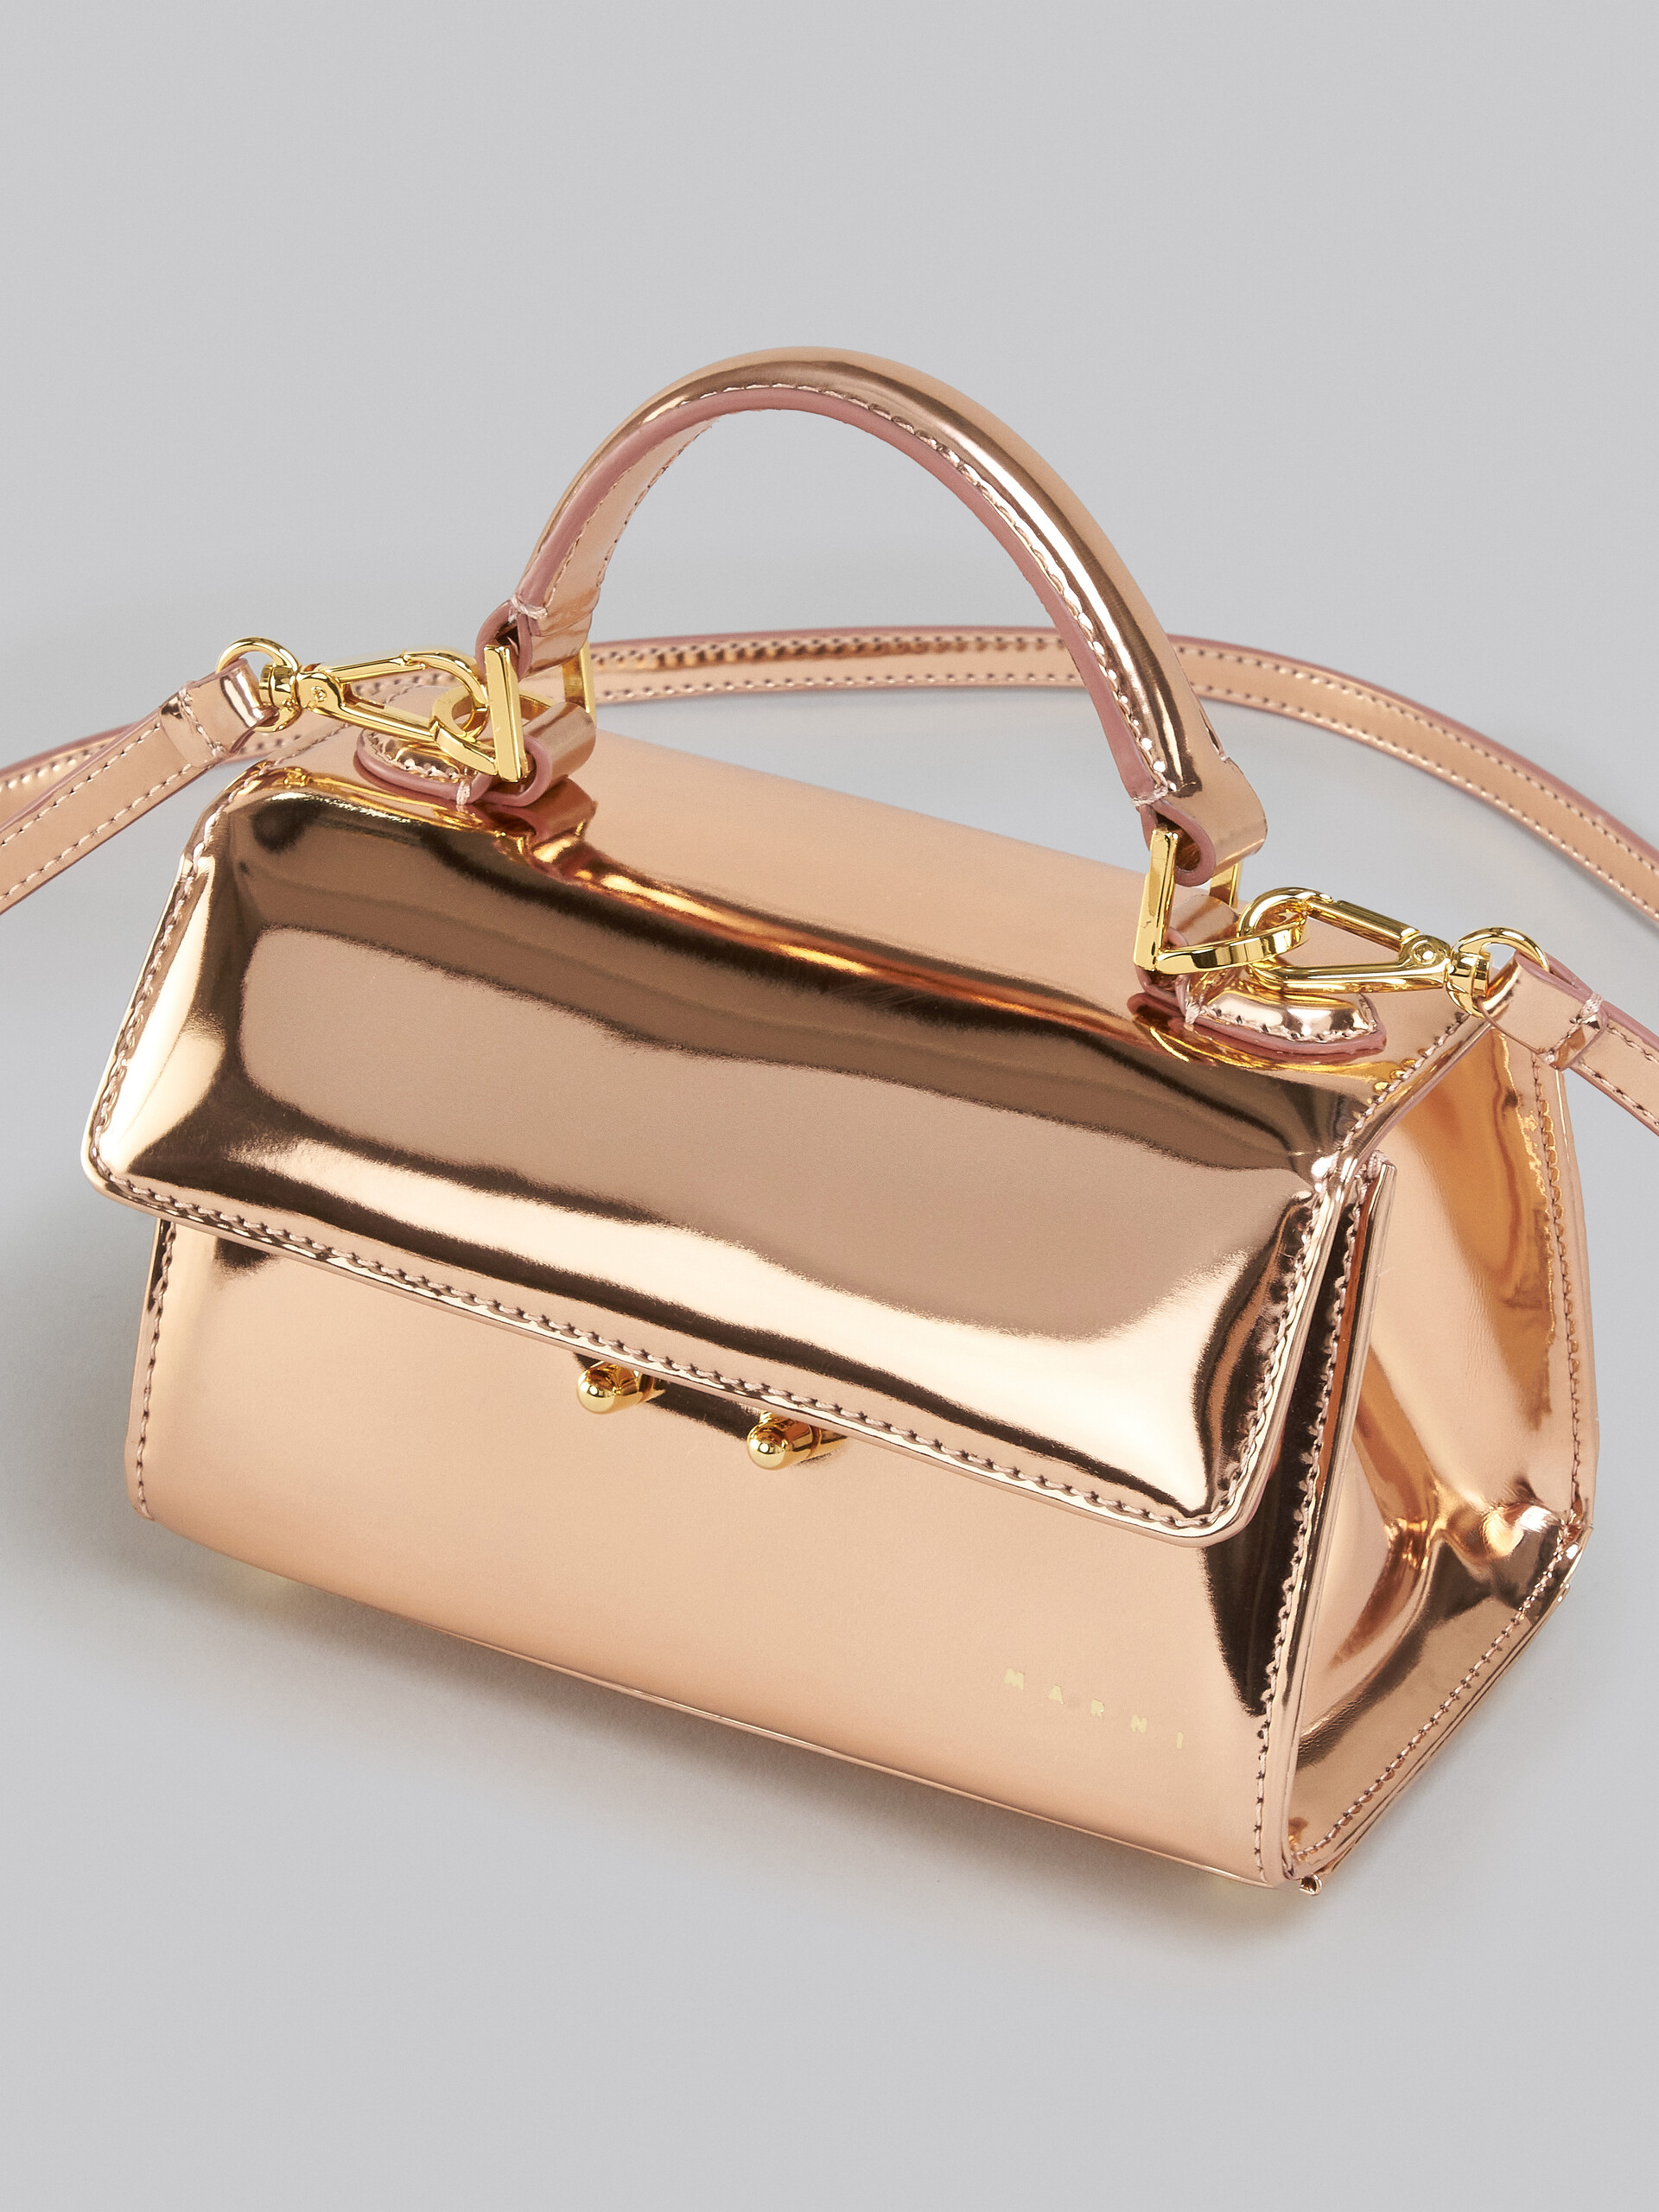 Relativity Mini Bag in rose gold mirrored leather - Handbags - Image 5